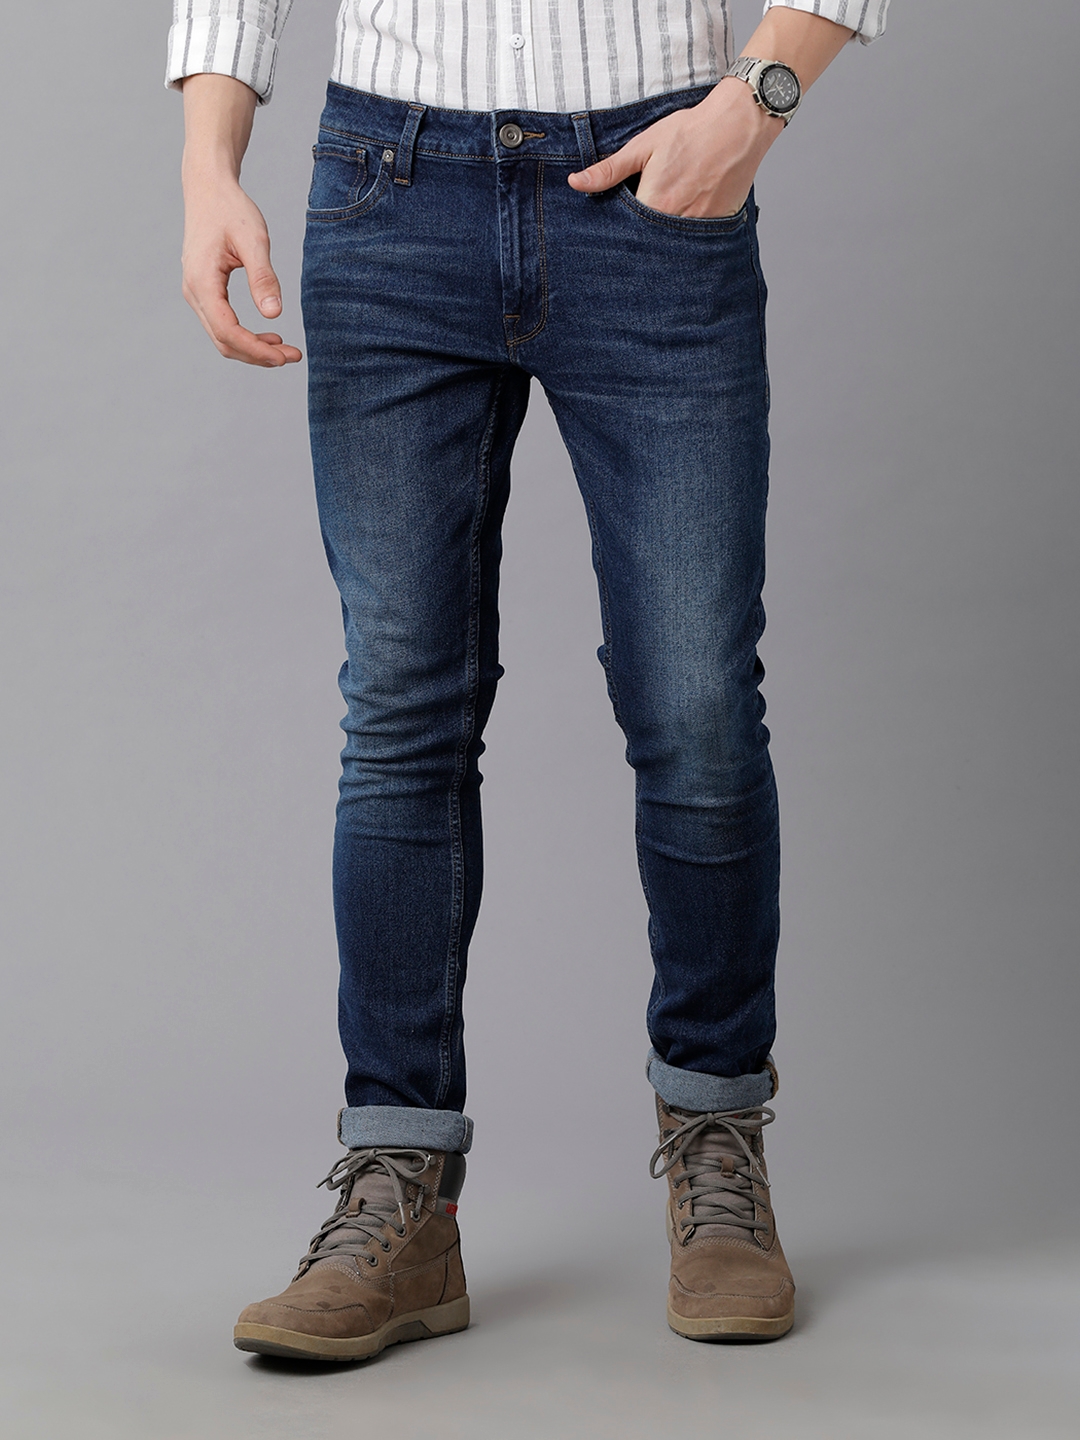 VOI JEANS Men's Solid Indigo Cotton Blend Mid Rise Skinny Fit Jeans